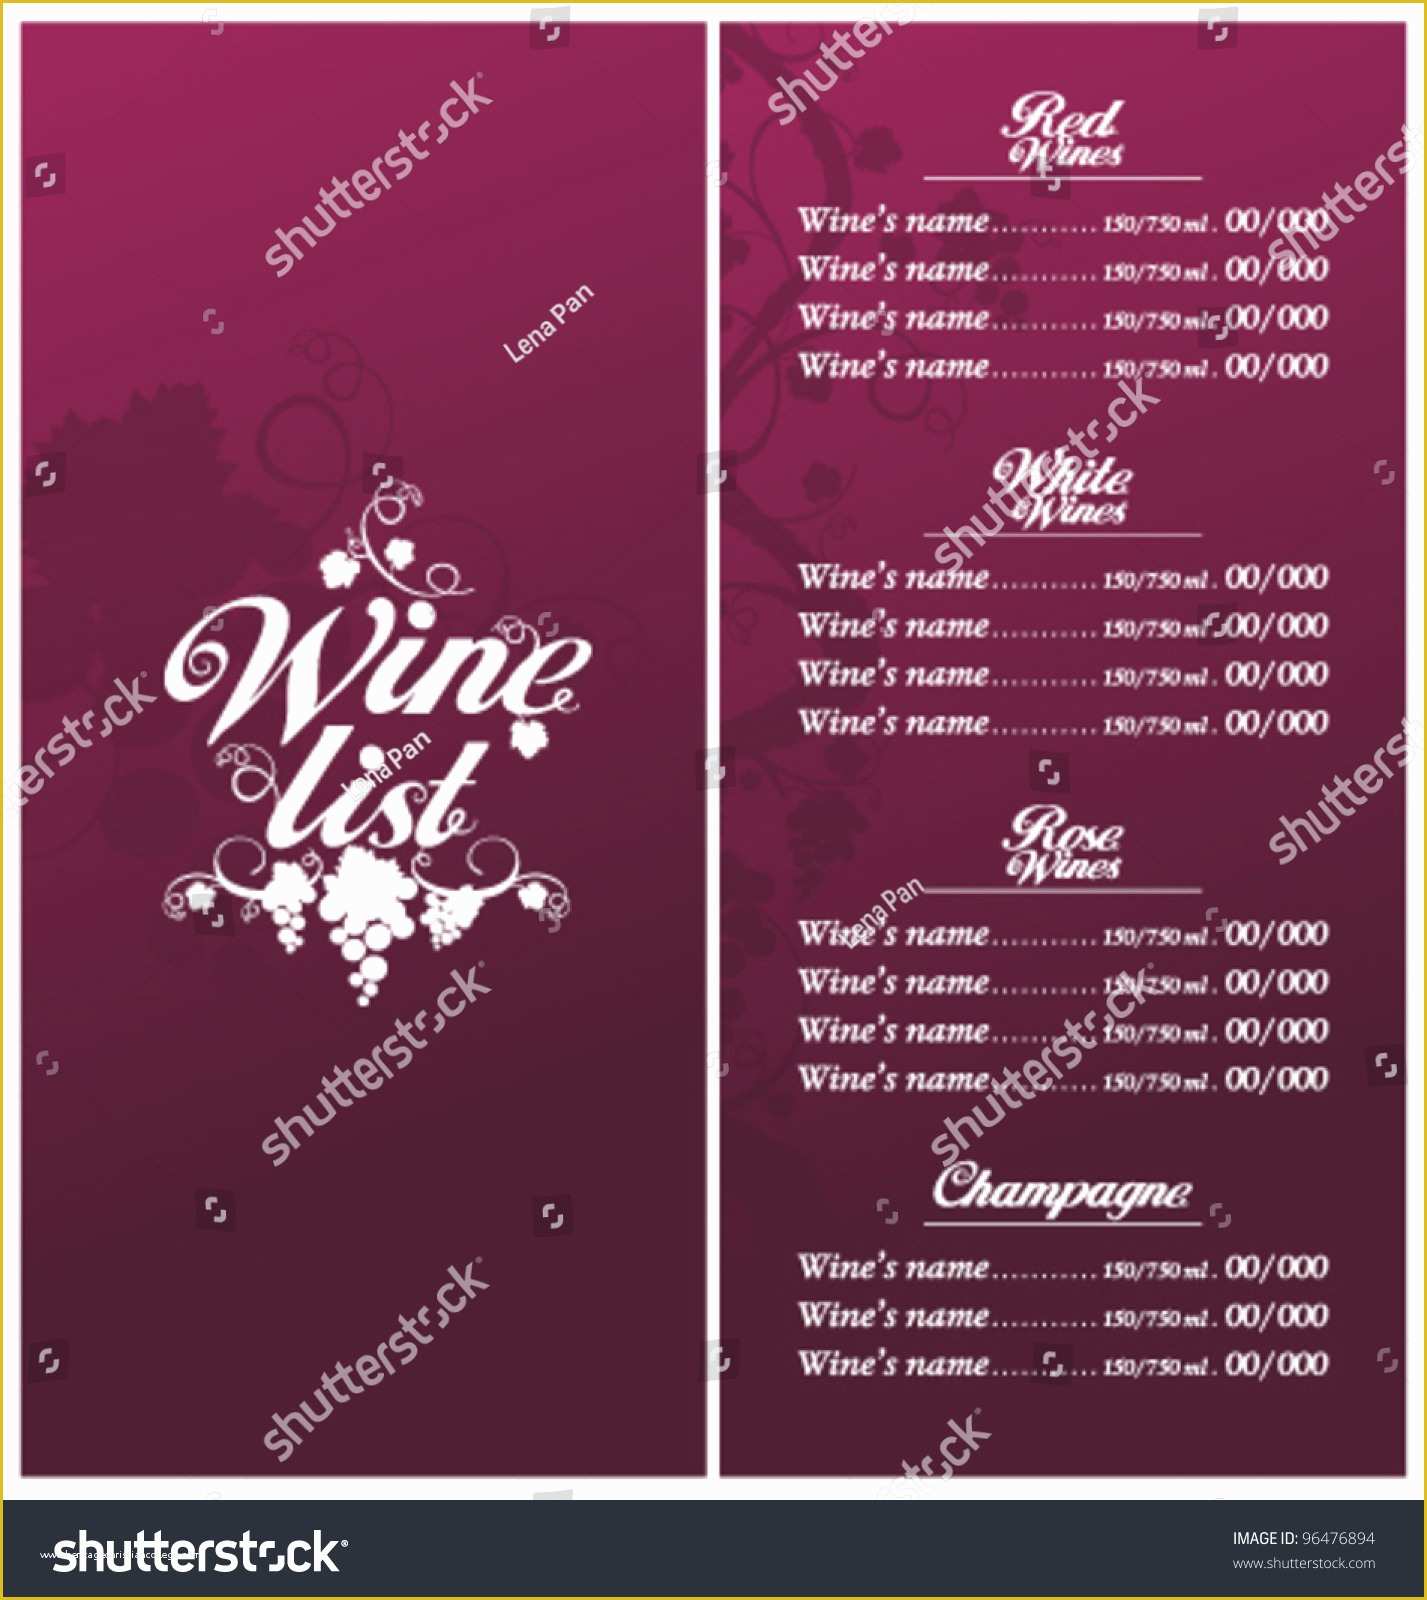 Wine Menu Template Free Of Wine List Menu Card Design Template Stock Vector